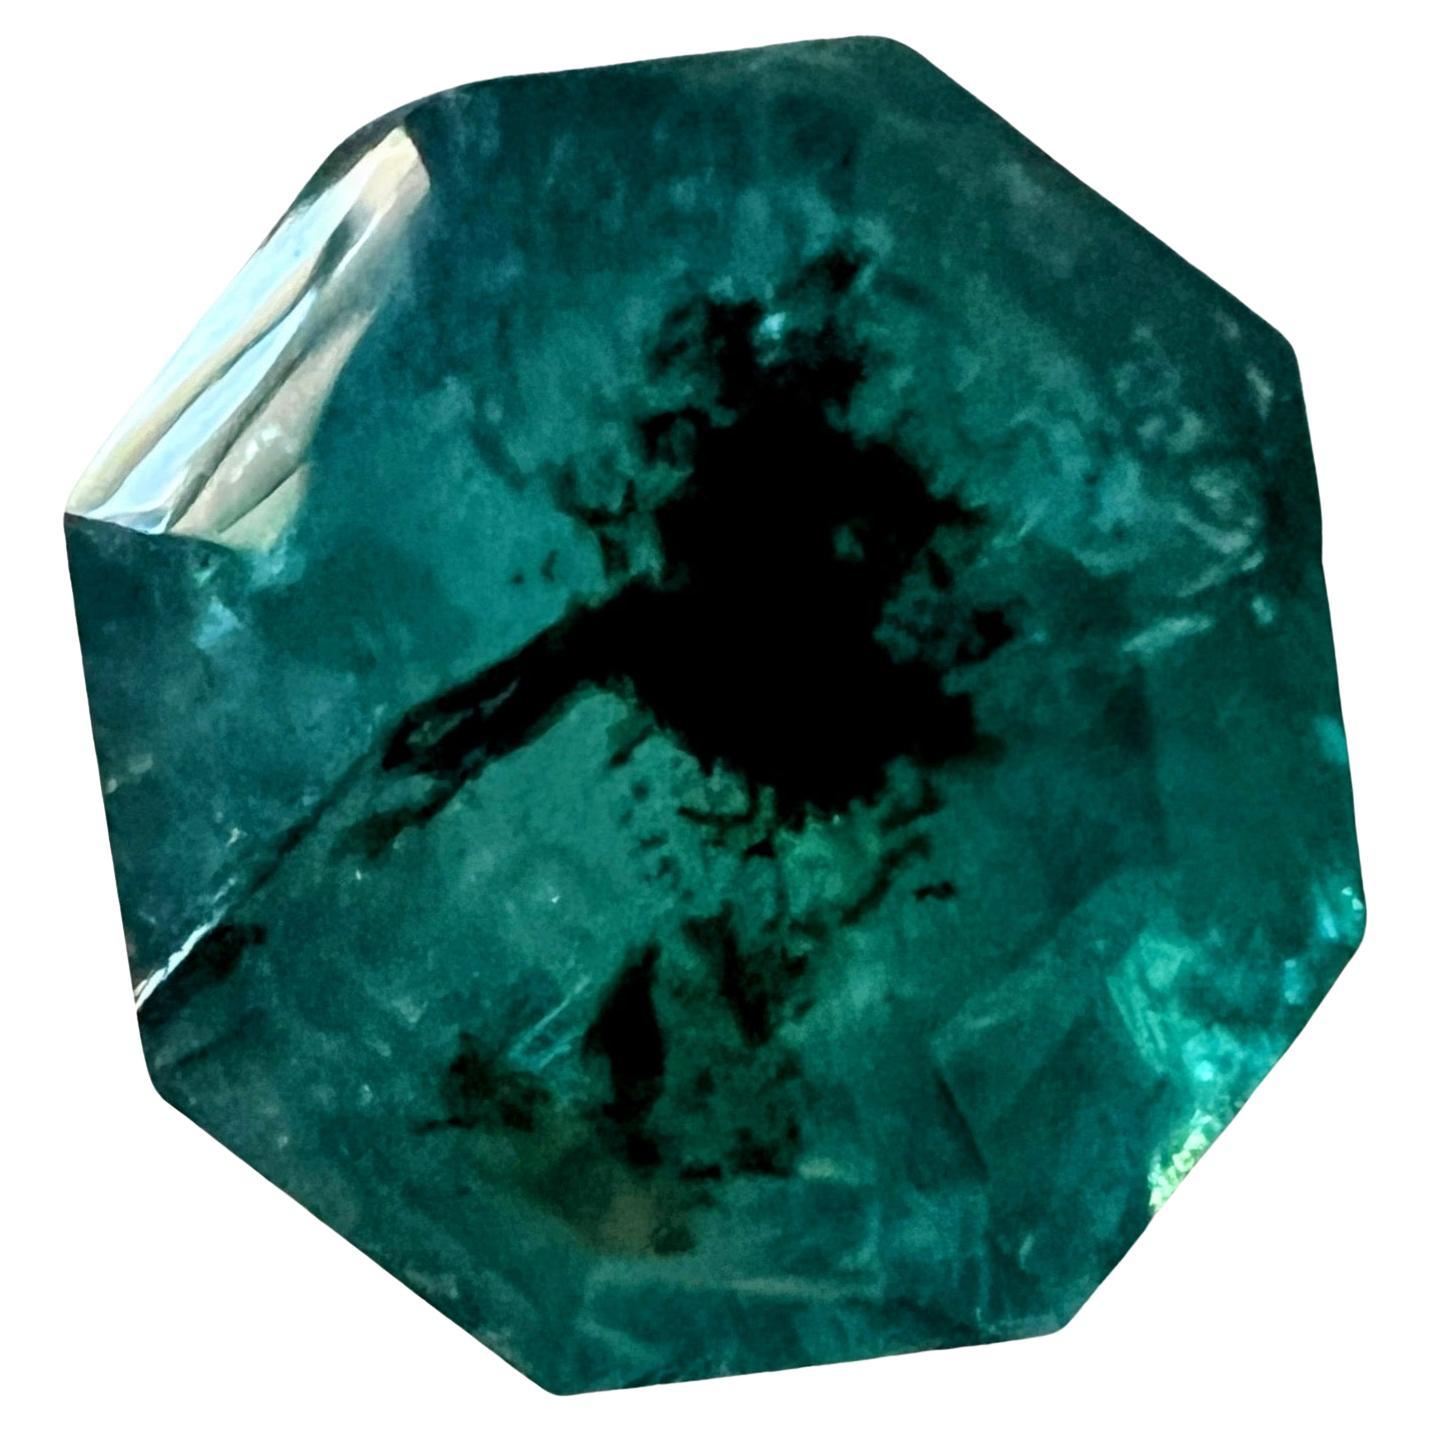 8.85ct Asscher Cut No-Oil Natural Untreated Emerald Gemstone For Sale 6